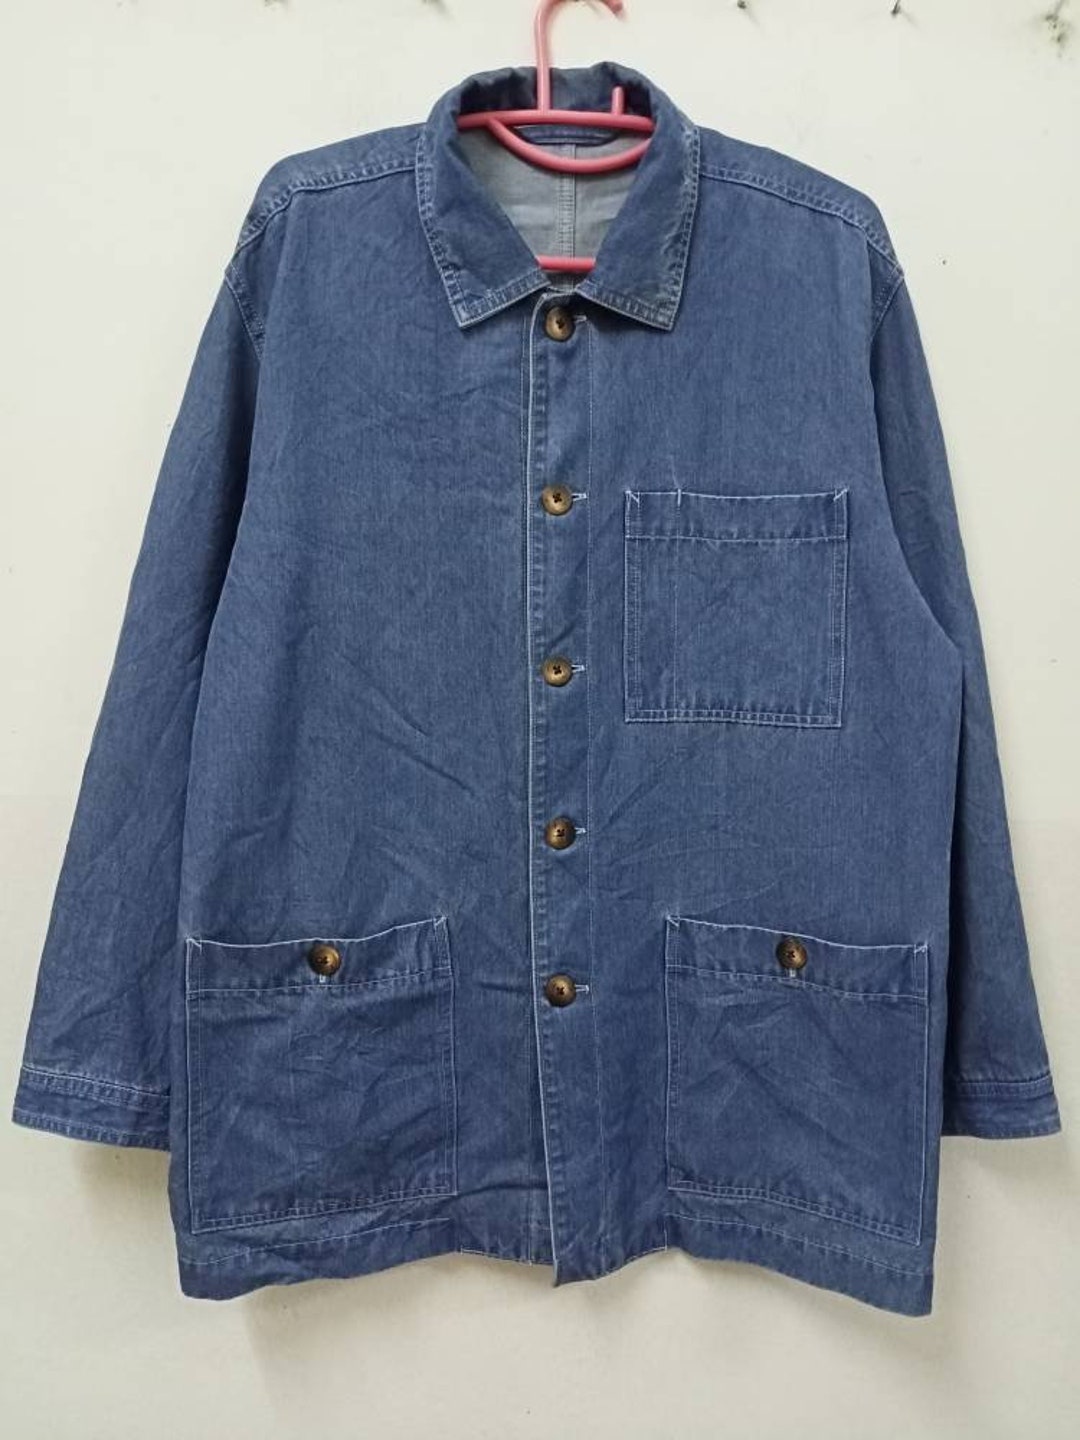 Vintage s CROCODILE Denim Jacket Workers Chore Blue Jeans   Etsy